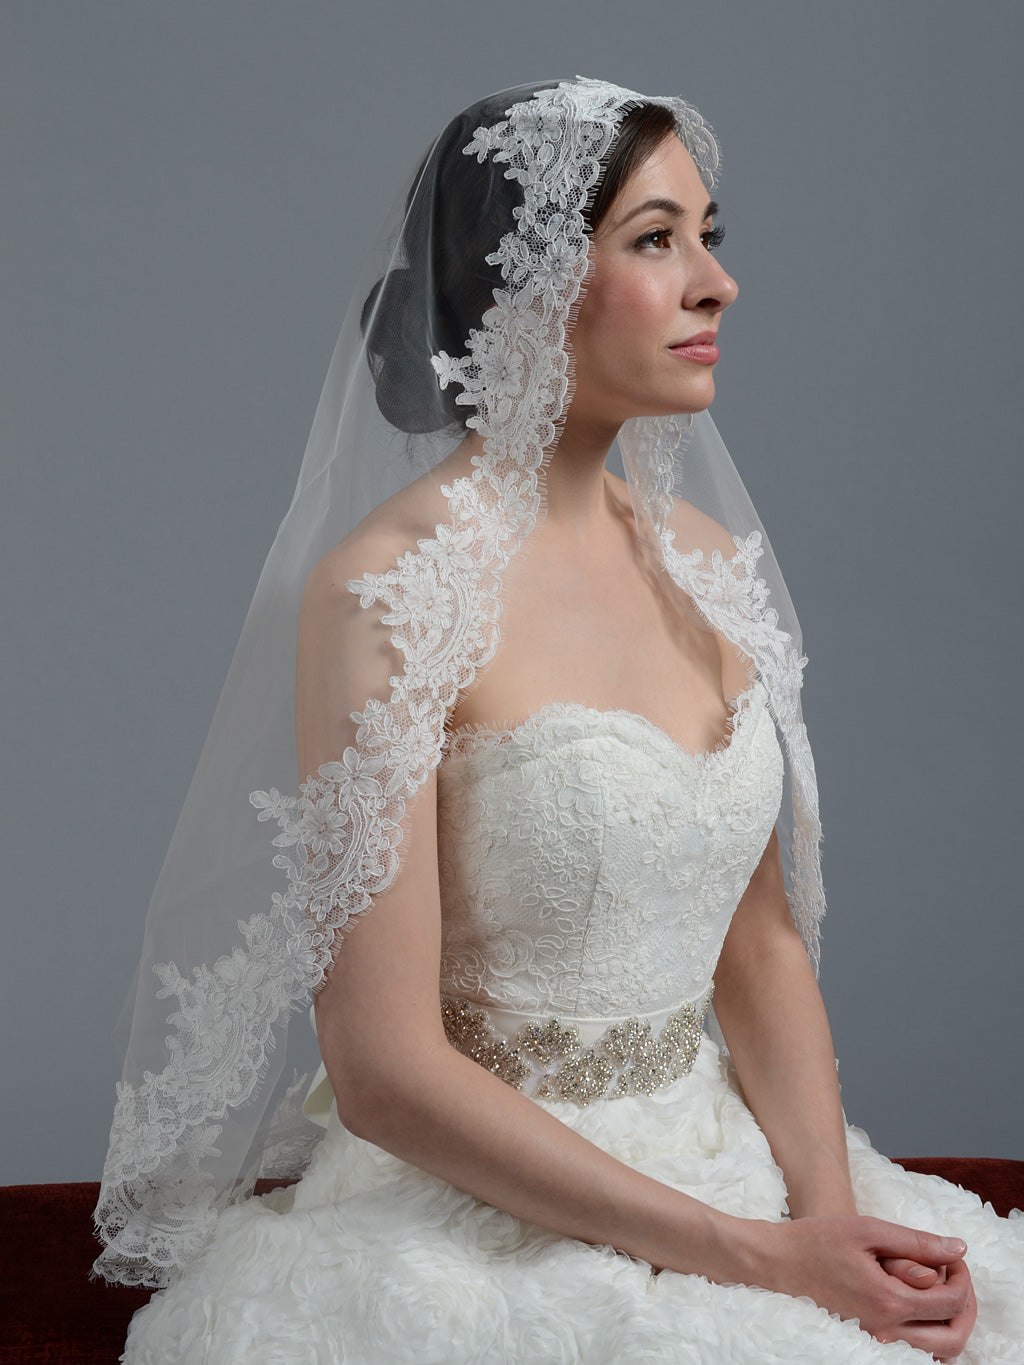 Graceful Ivory Alencon Lace Trim Embroidered Retro Tulle Lace Wedding Veil  Bridal Lace Trim 